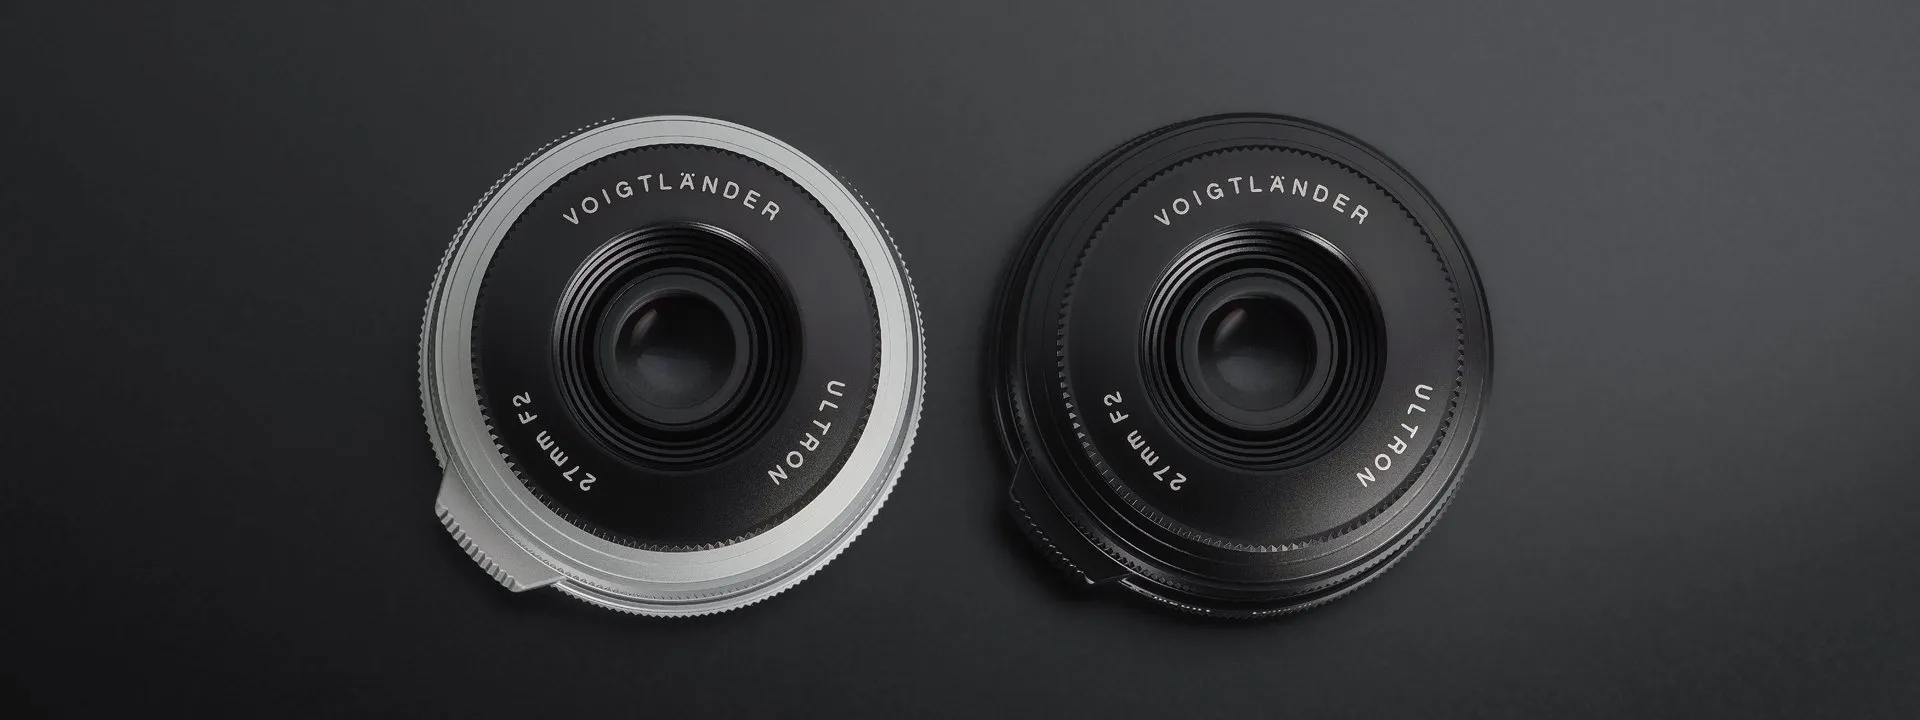 Ống kính Voigtlander Ultron 27mm F2 cho Fuijfilm X (Black)